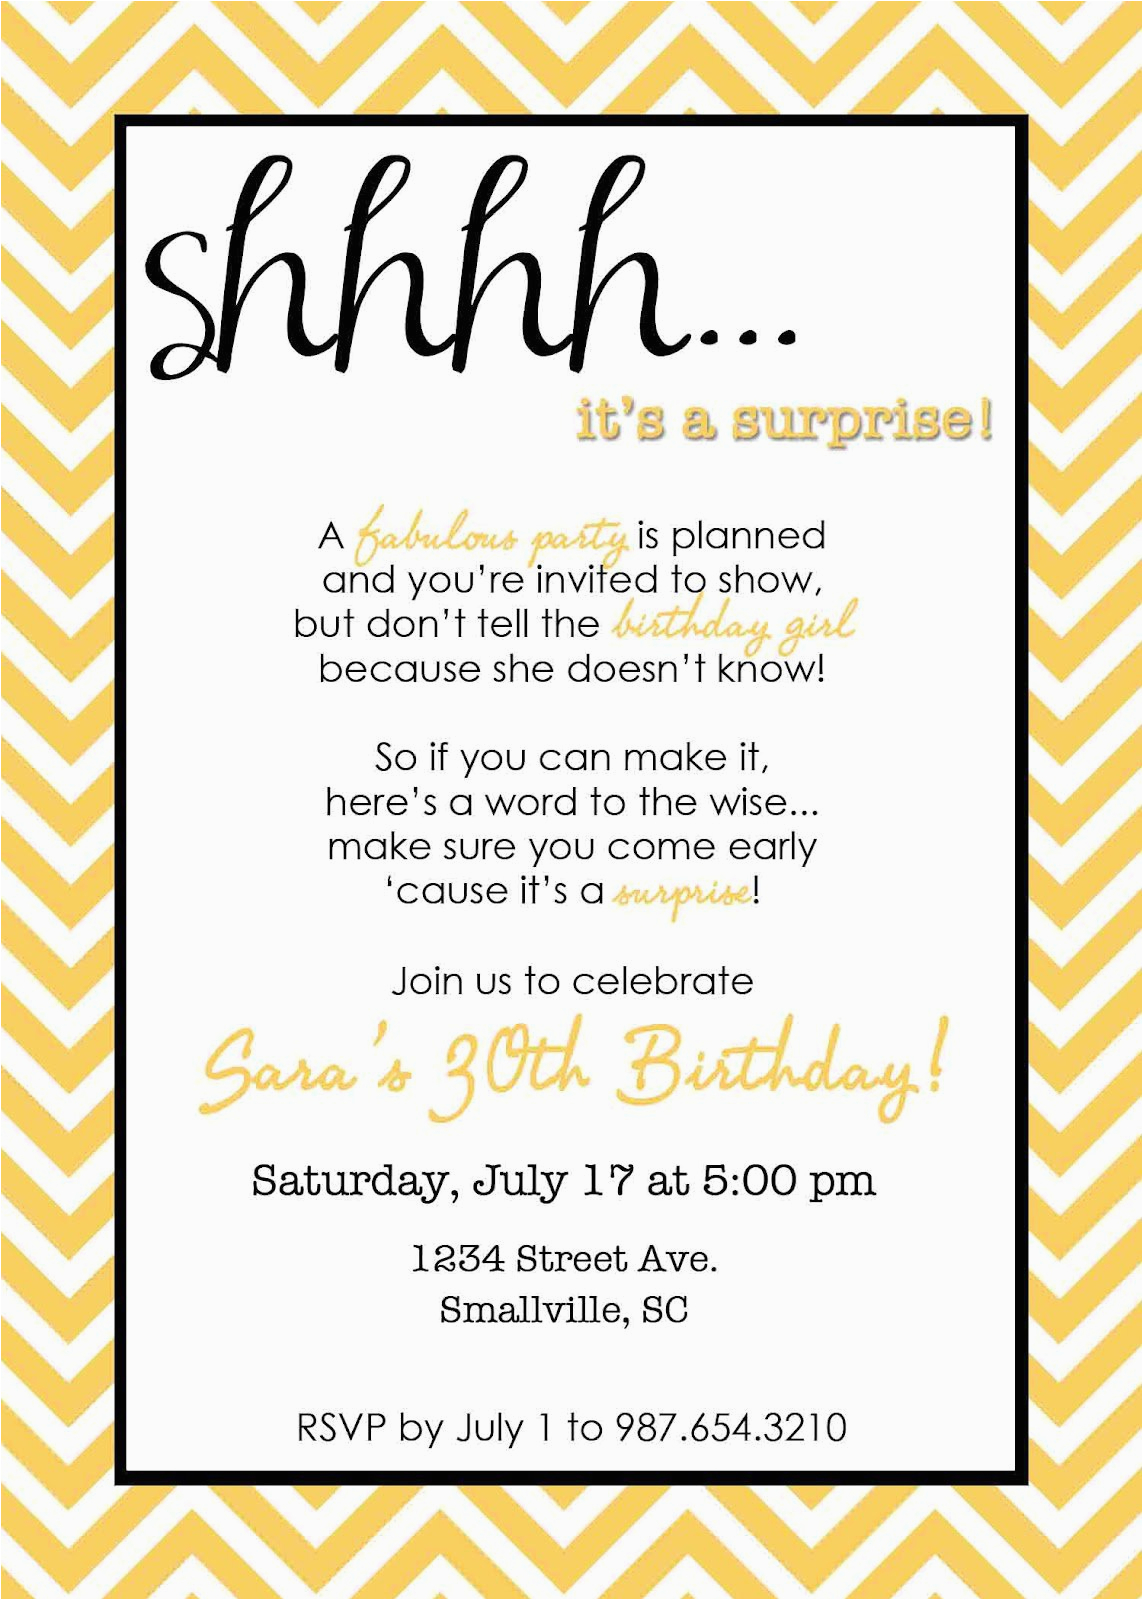 11th-birthday-invitation-wording-birthdaybuzz